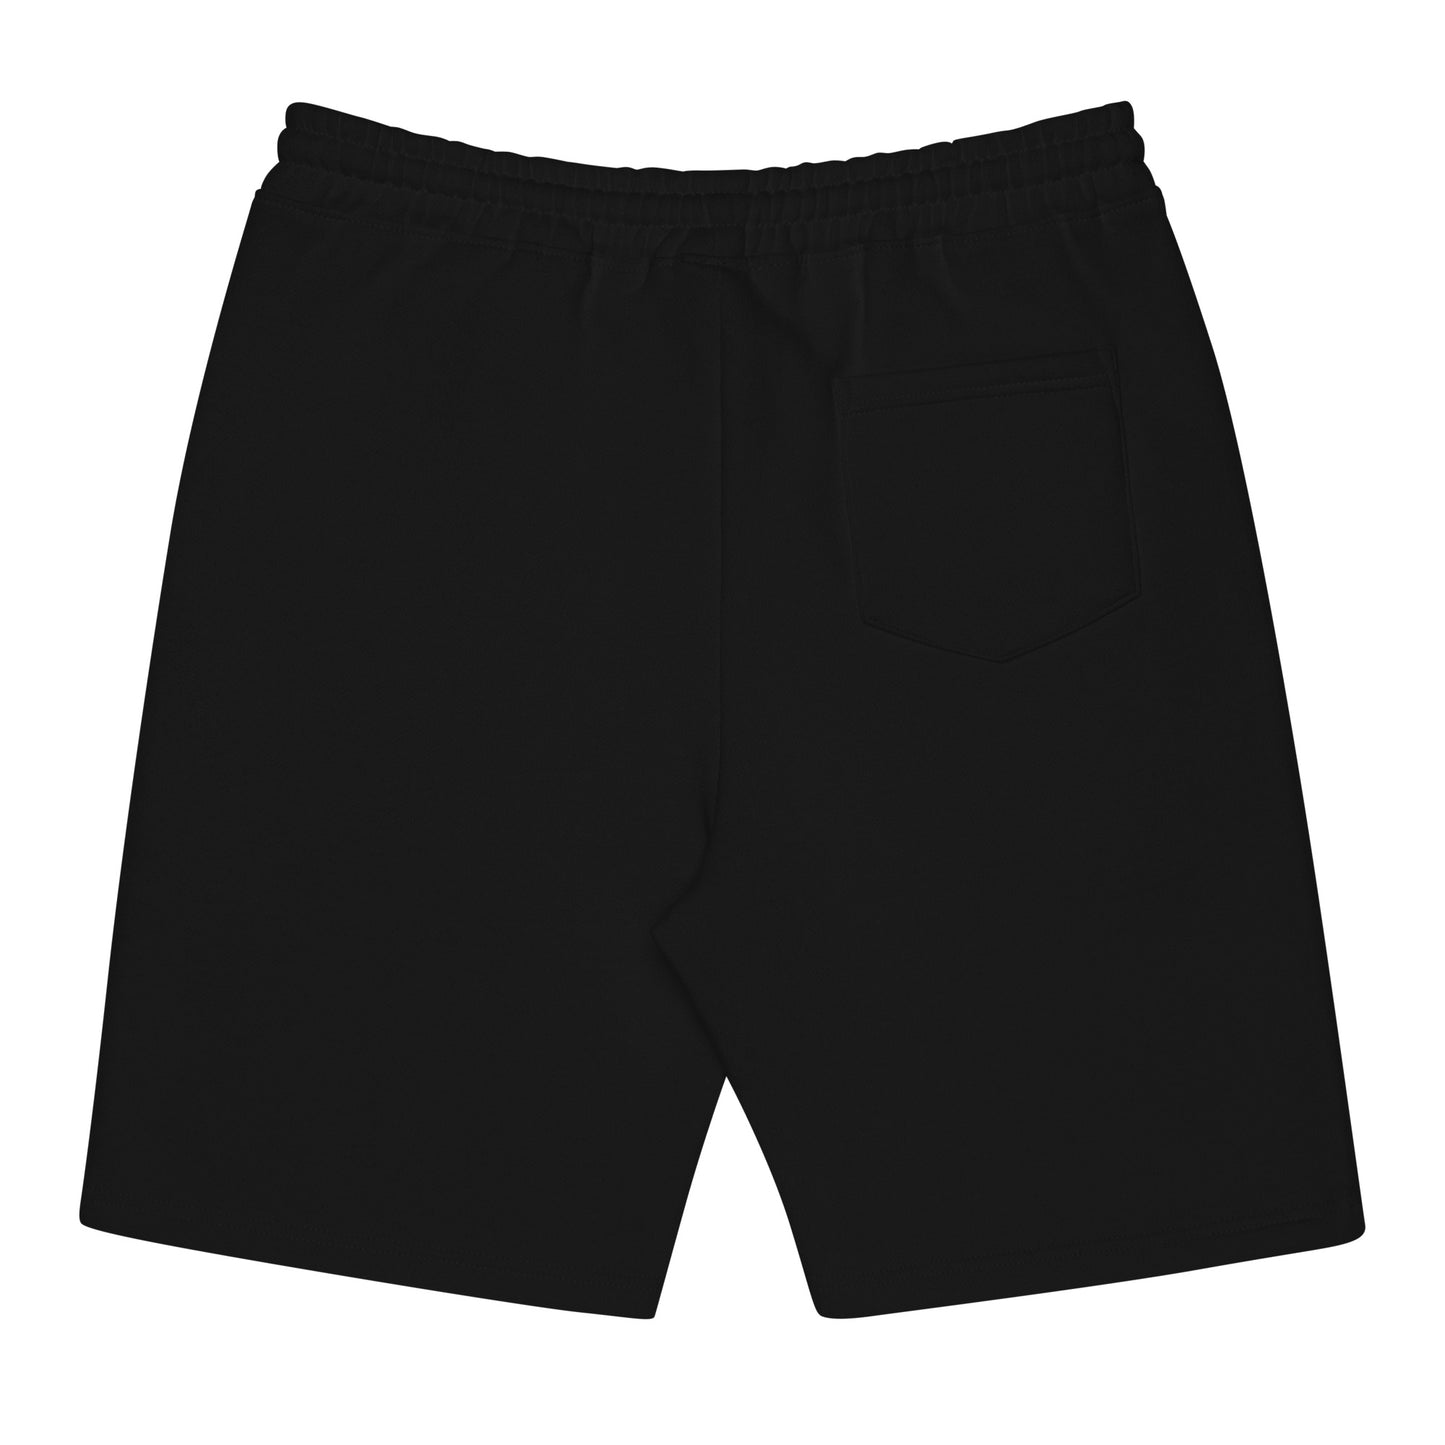 Men's Midnight Party fleece shorts